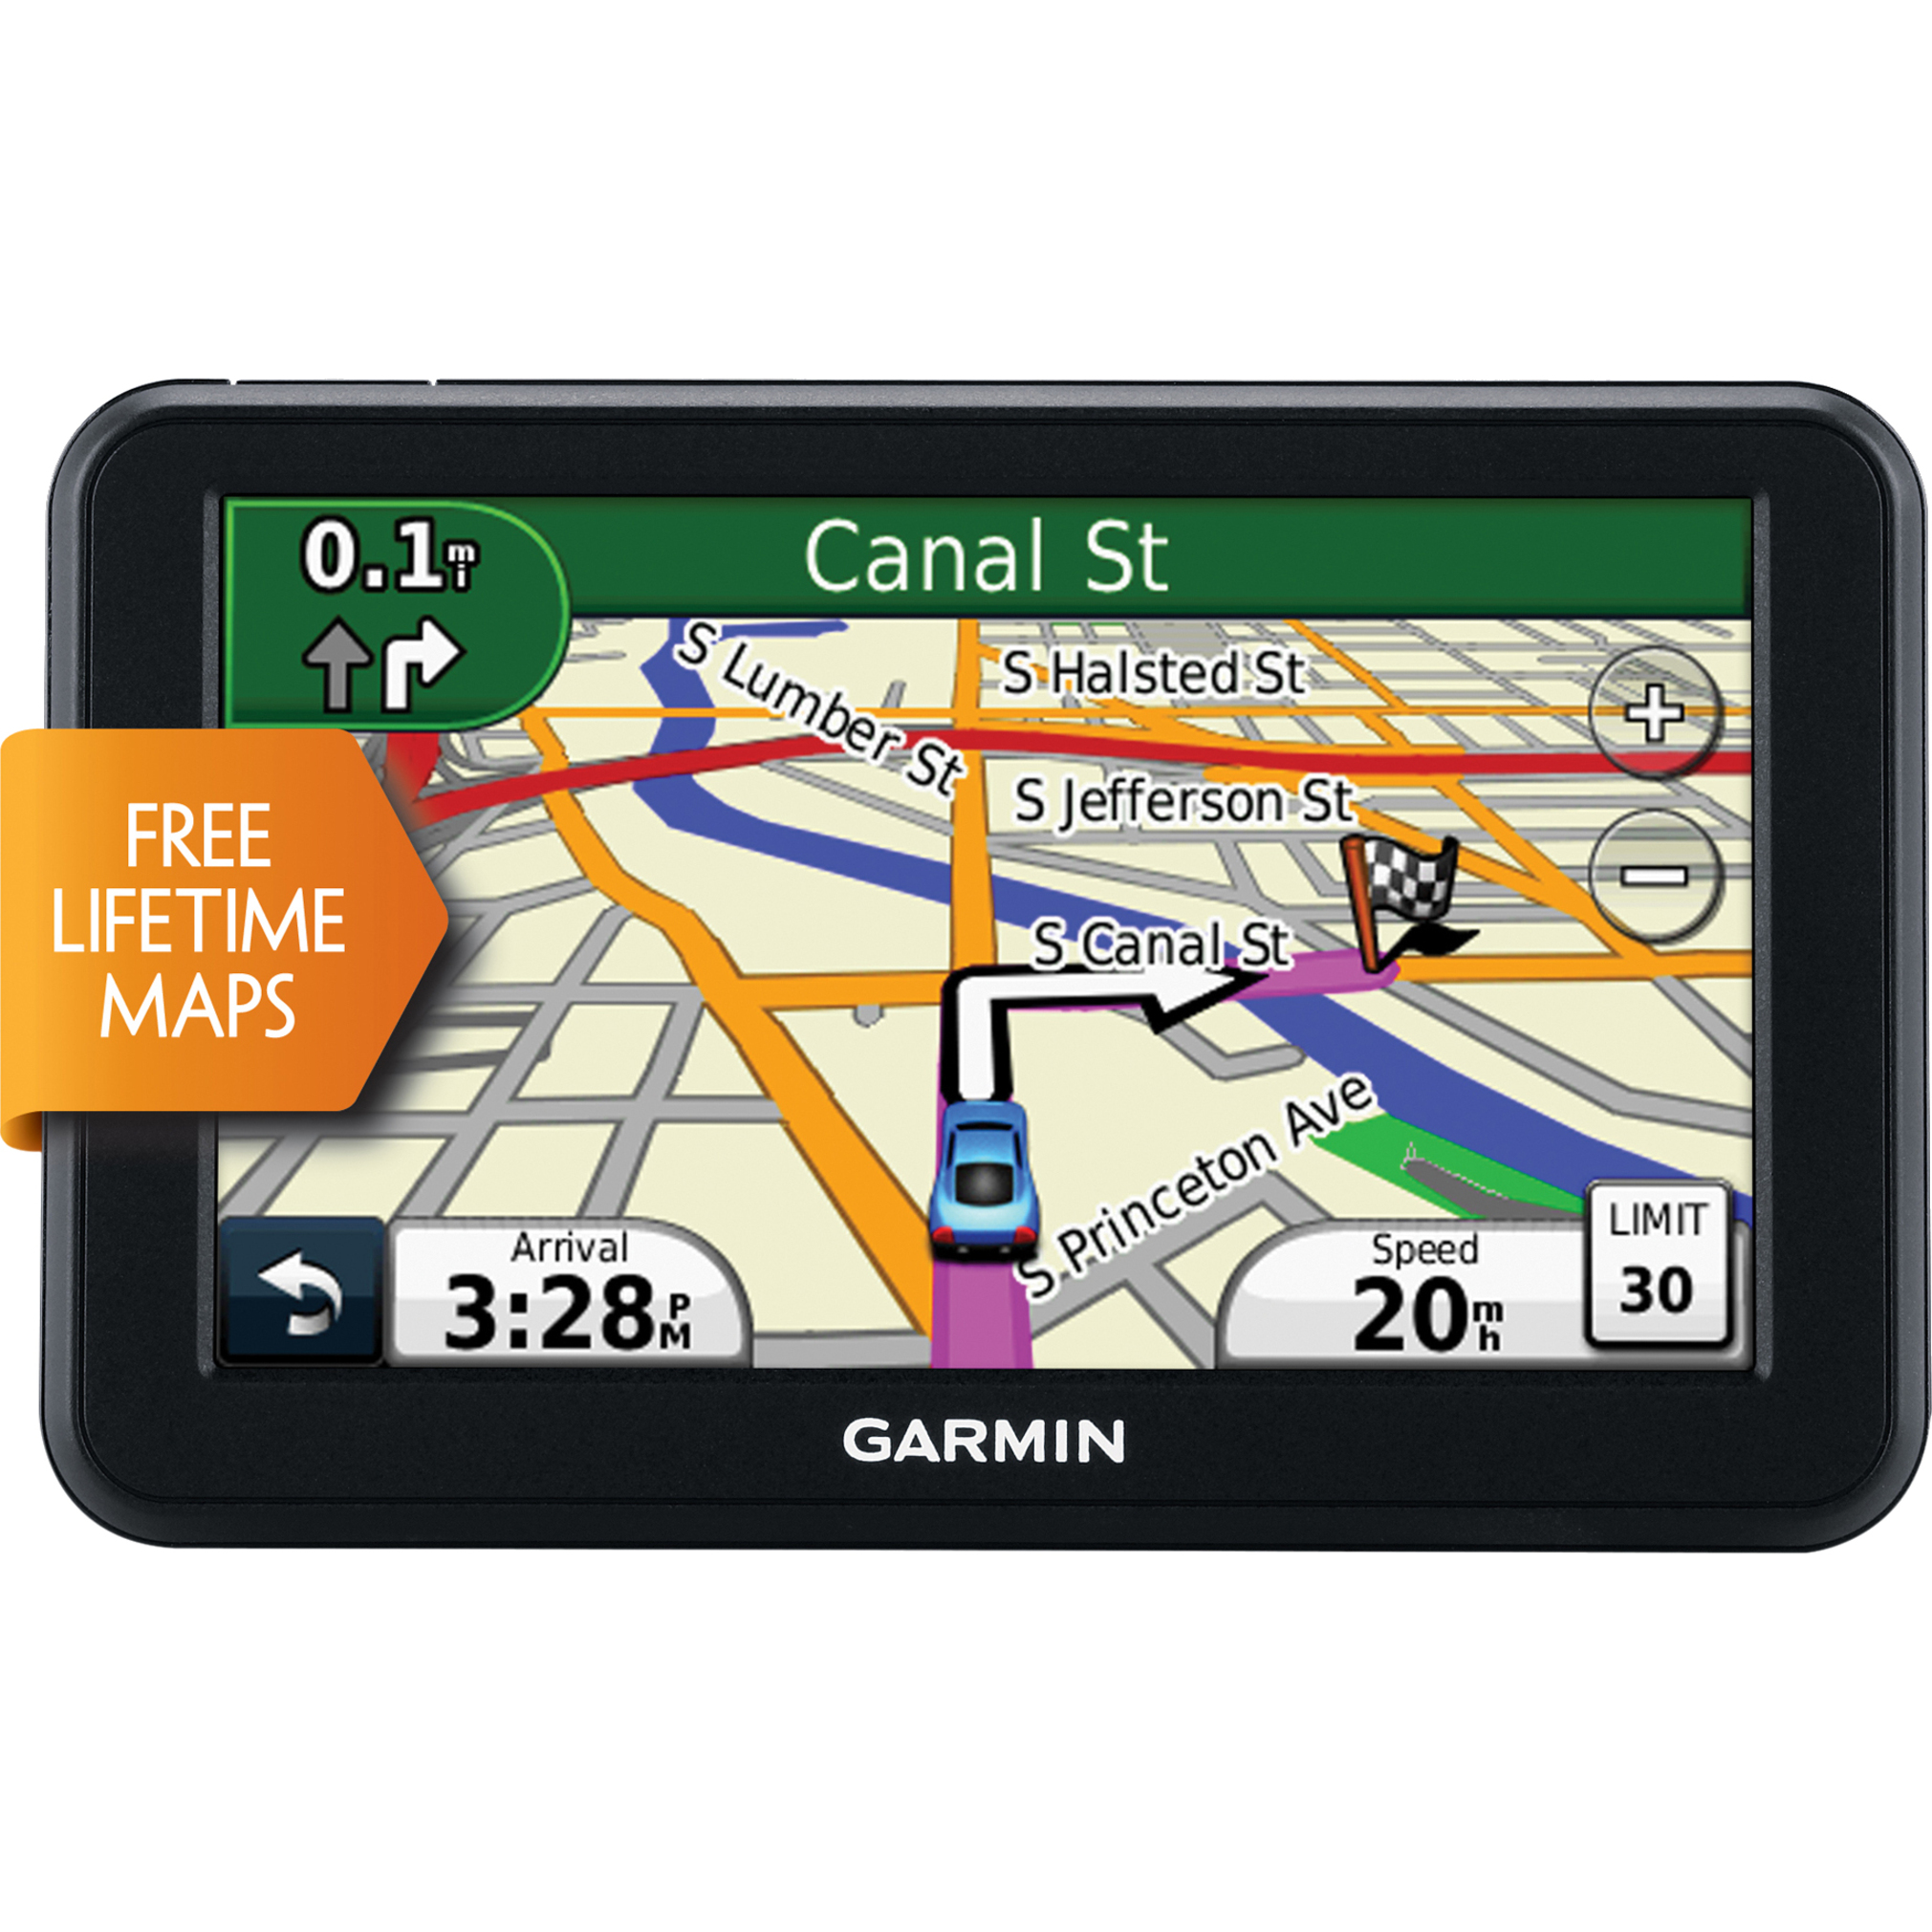 Garmin nüvi 50LM Automobile Portable GPS Navigator - image 1 of 3